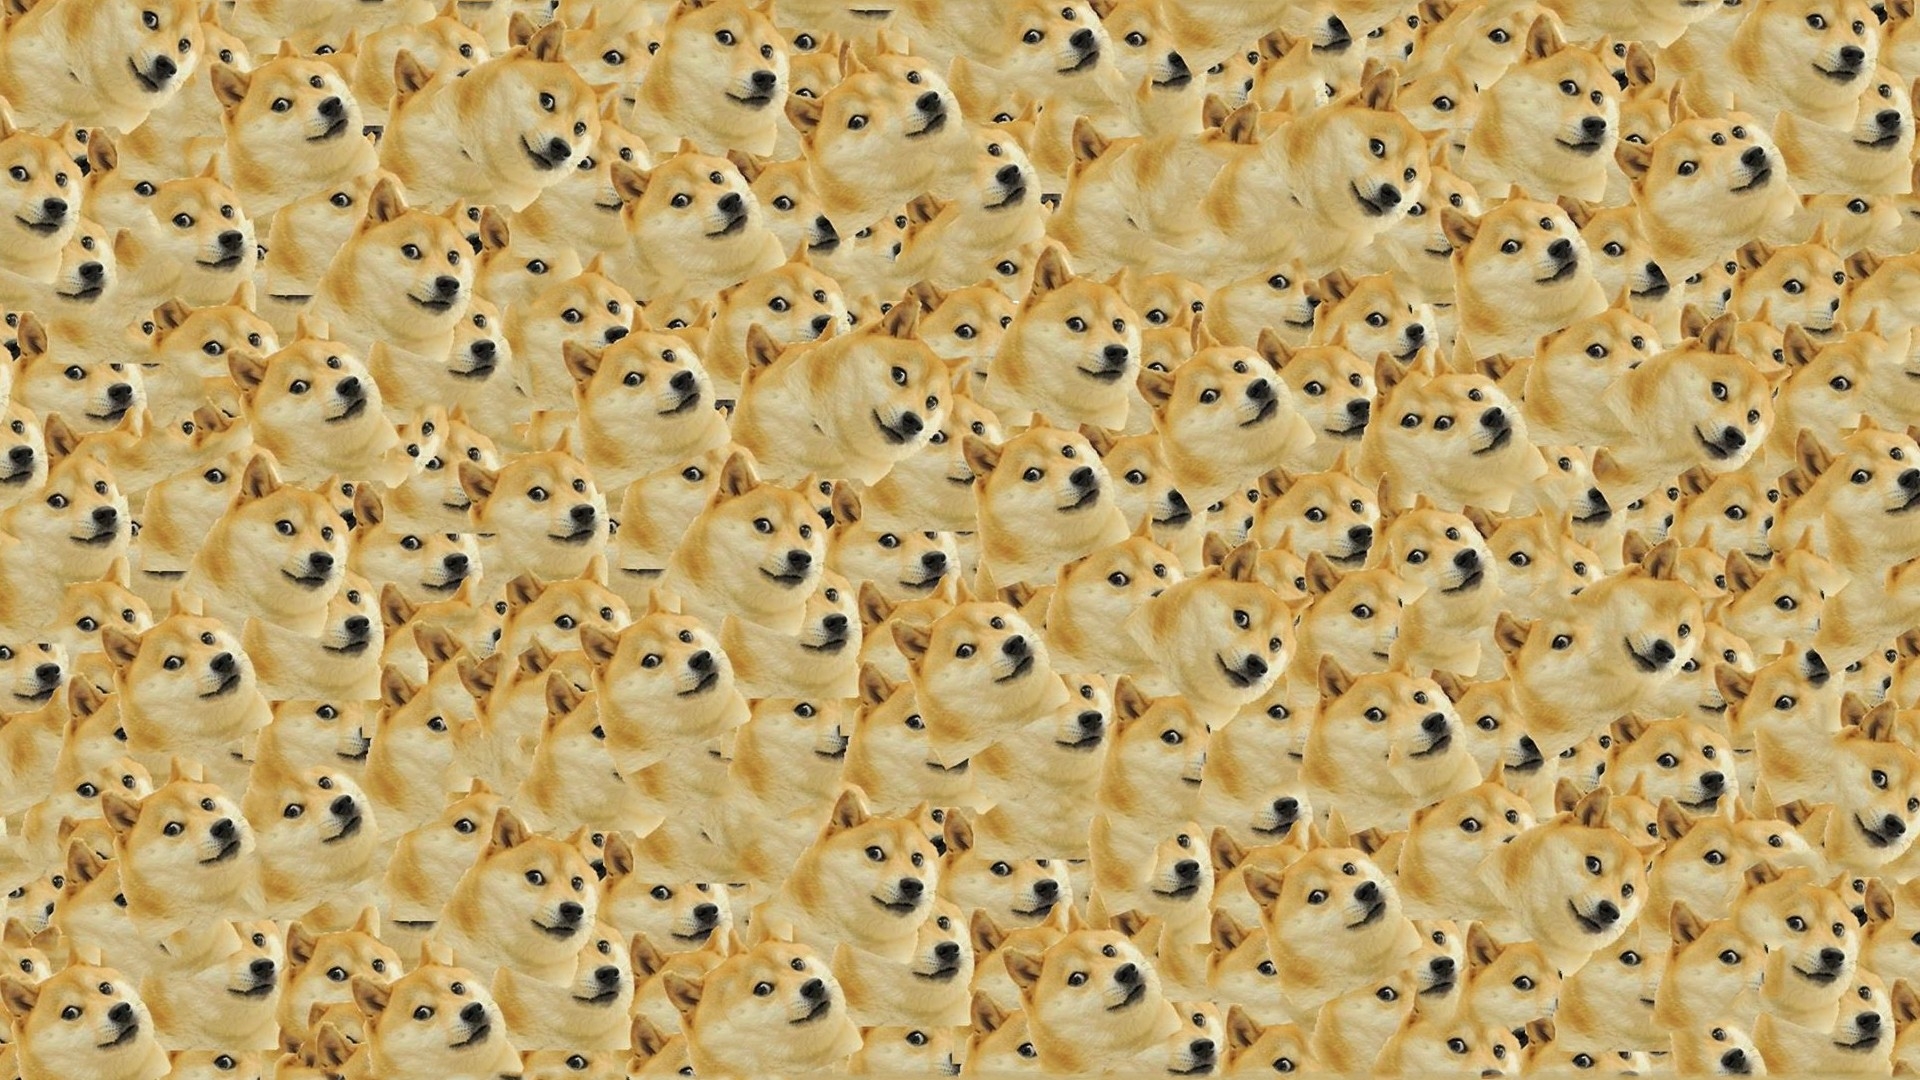 Its full of Doge   Doge Wallpaper 1920x1080 14009